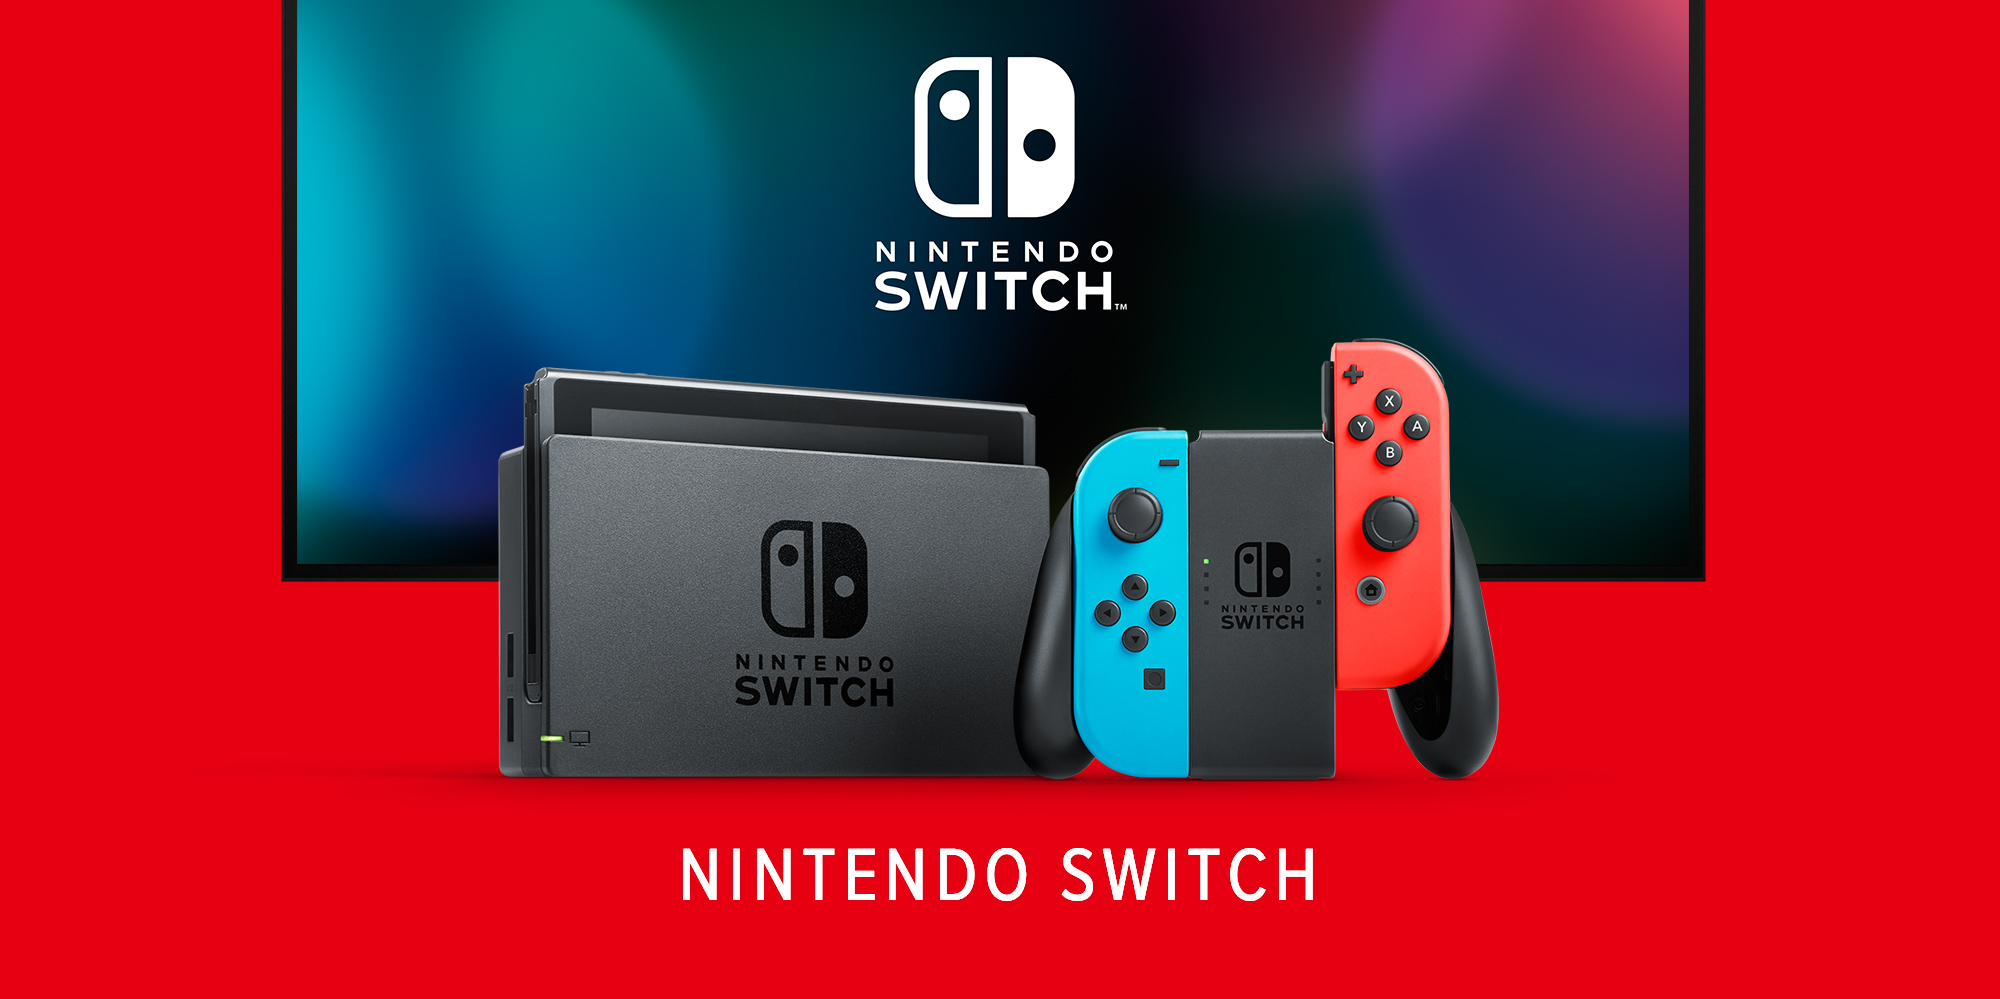 Nintendo switch website